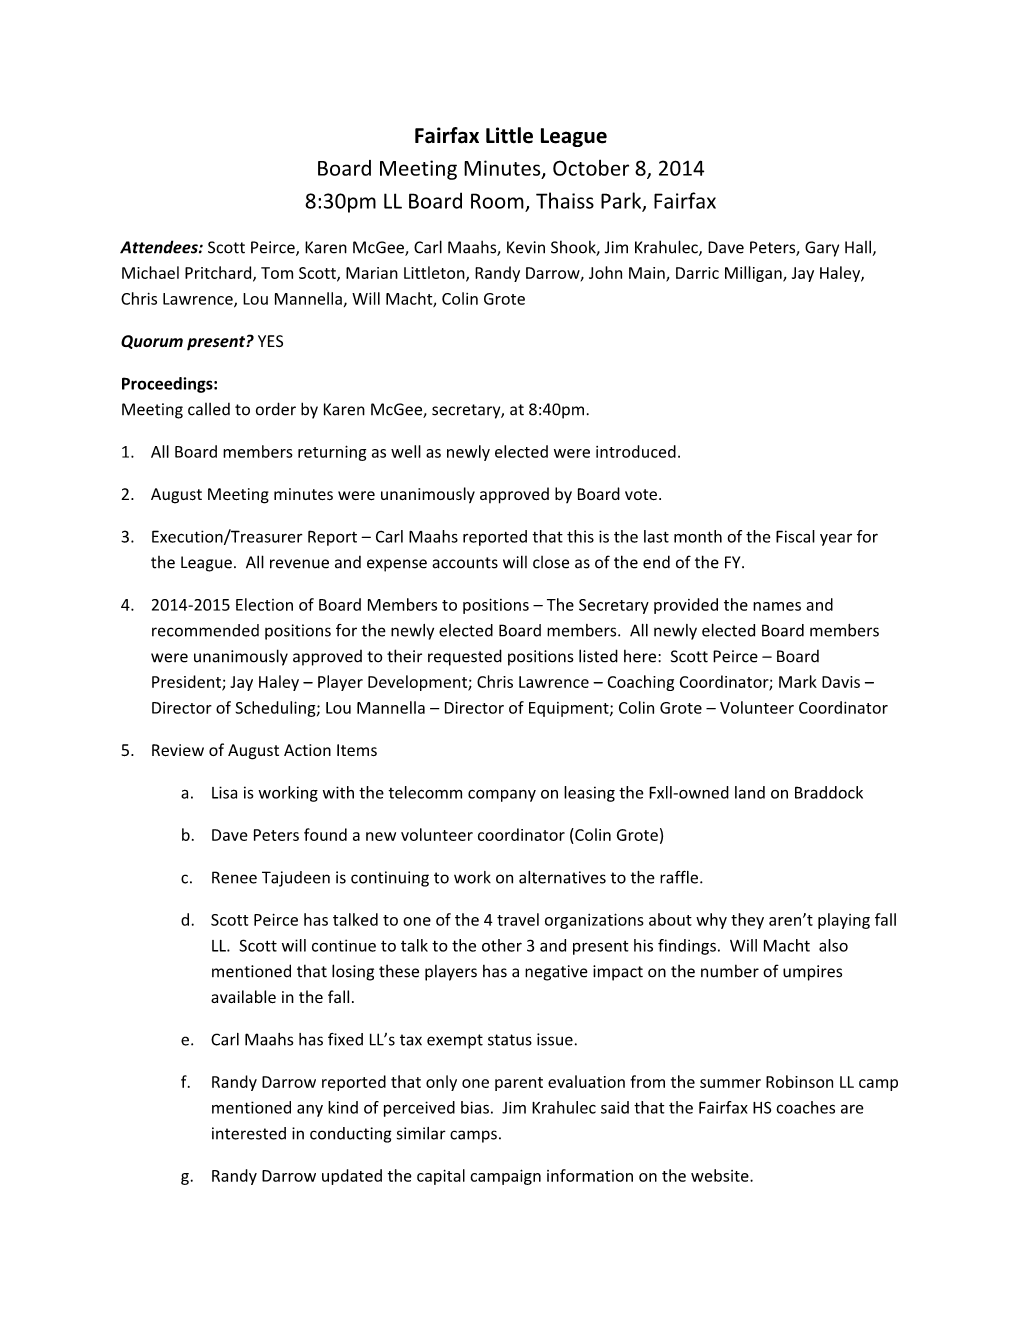 Fairfax Little League Board Meeting Minutes, October 8, 2014 8:30Pm LL Board Room, Thaiss